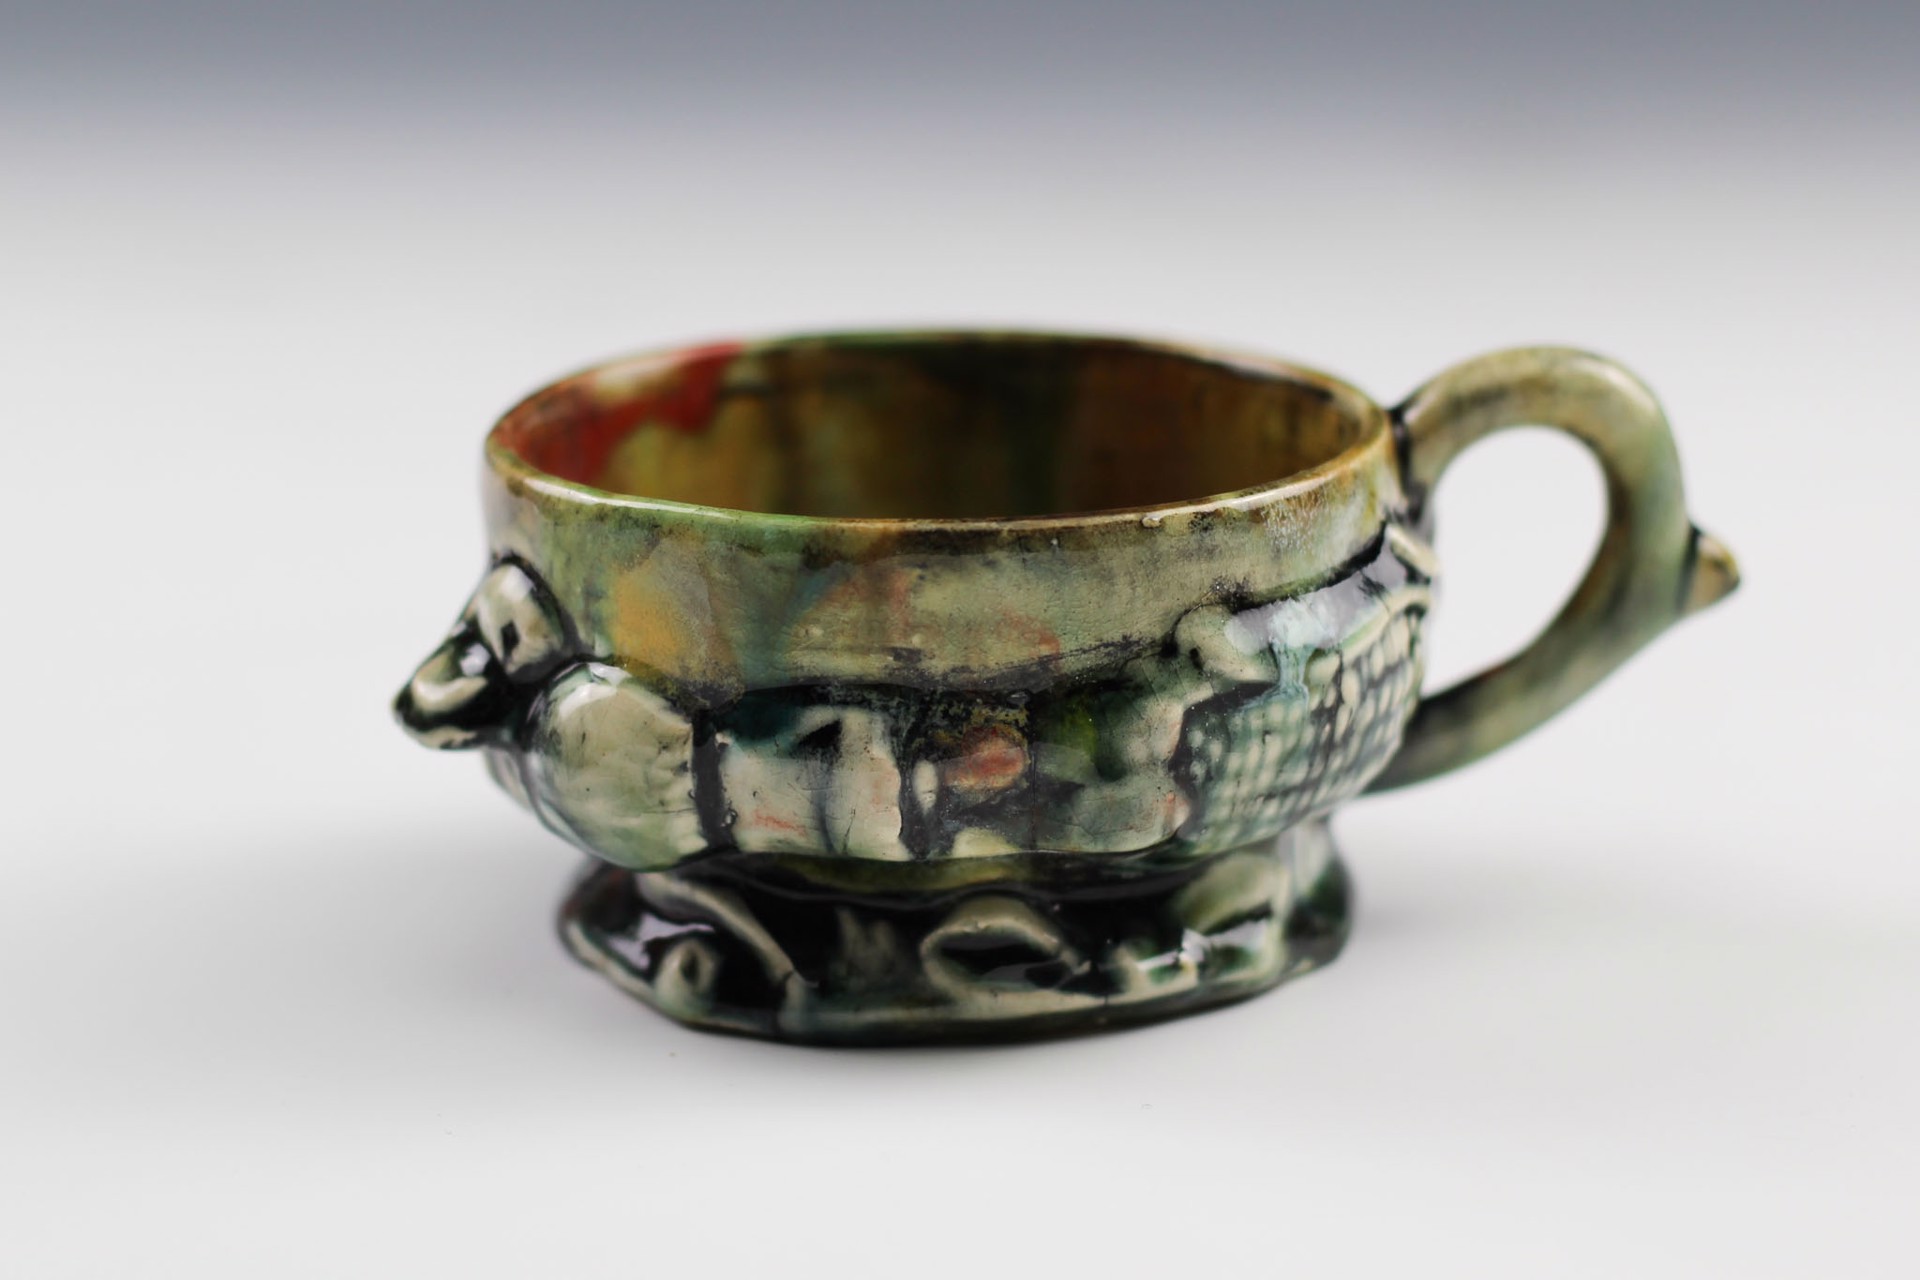 Teacup by Craig Clifford